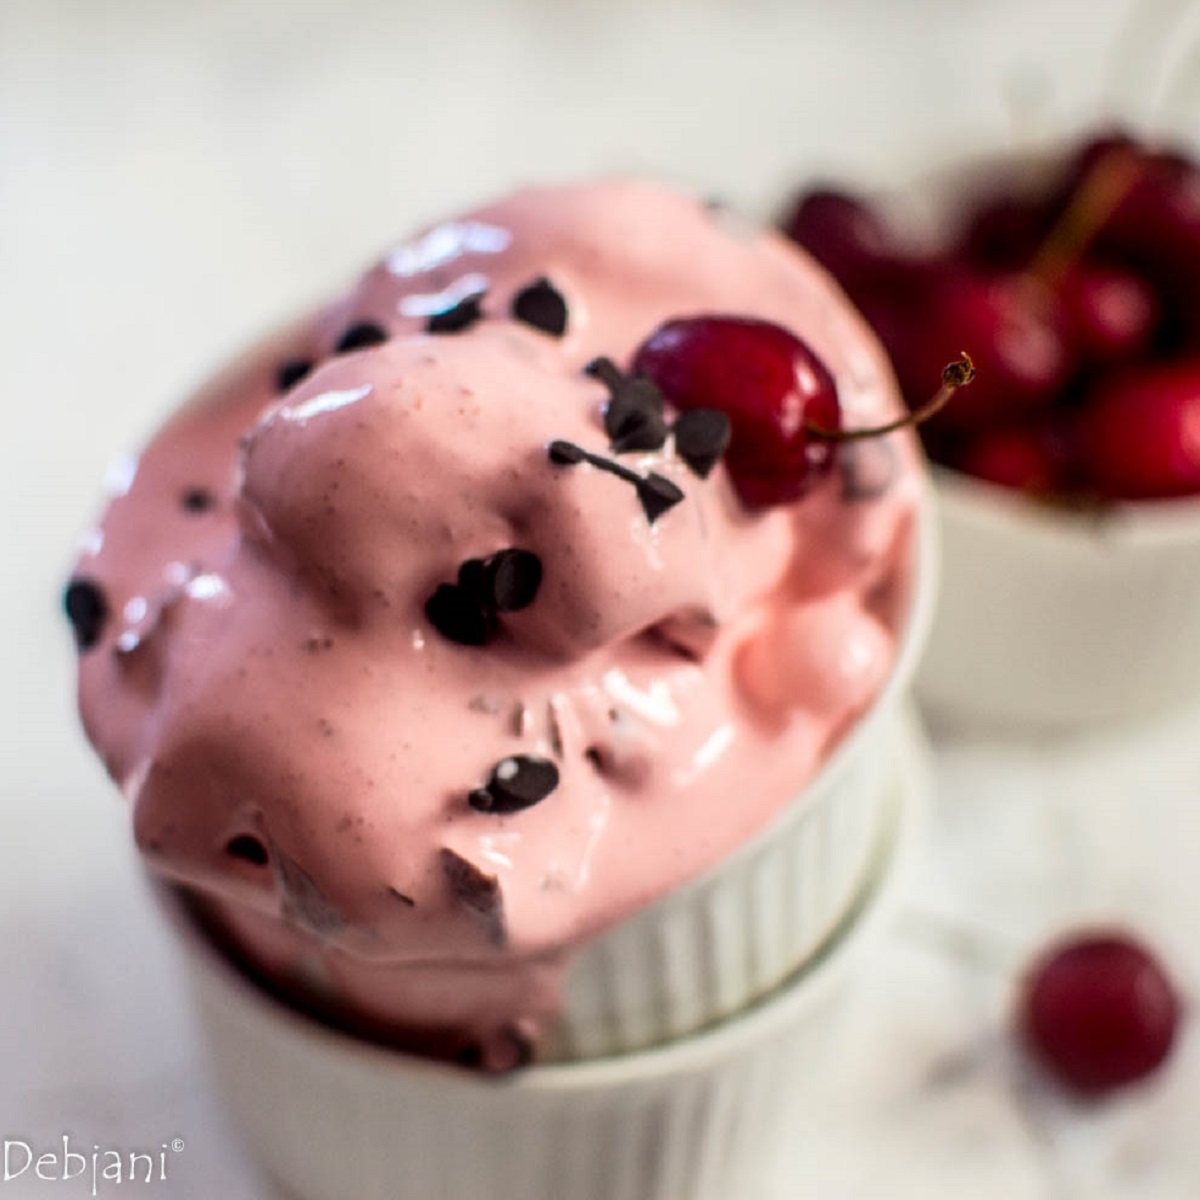 %Cherry ice cream recipe debjanir rannaghar